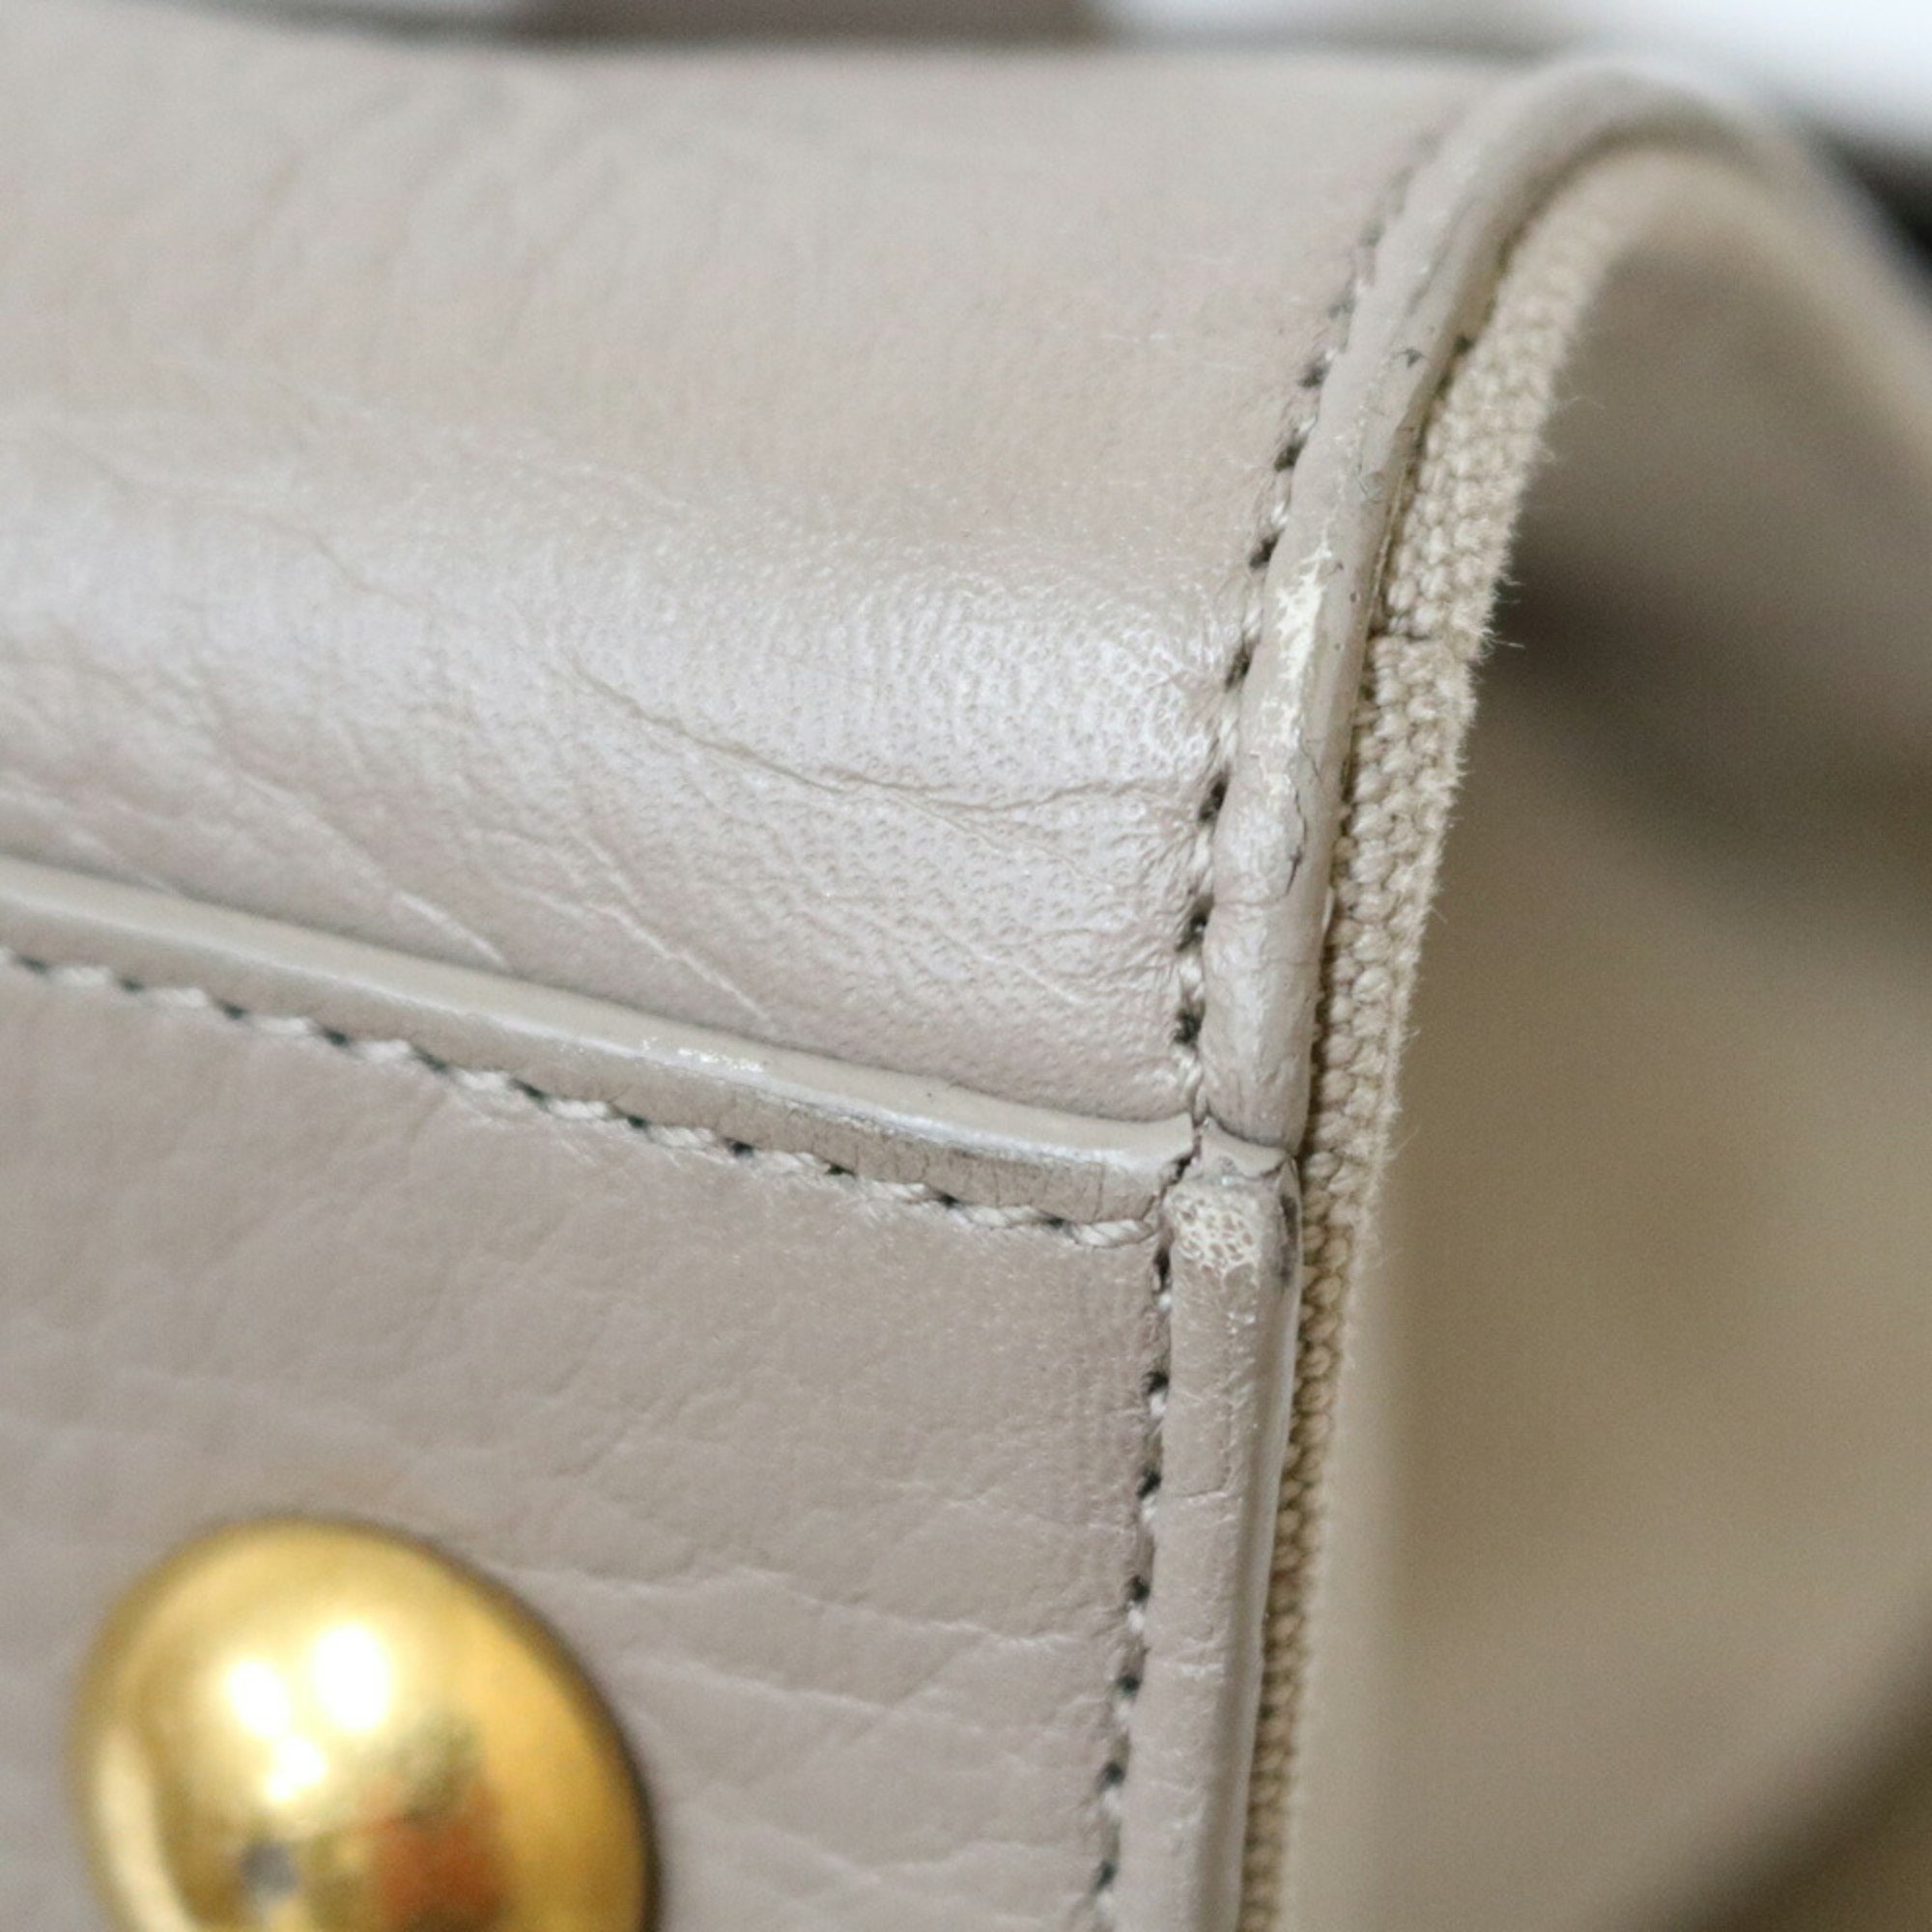 SAINT LAURENT shoulder bag handbag muse to gray ladies leather canvas